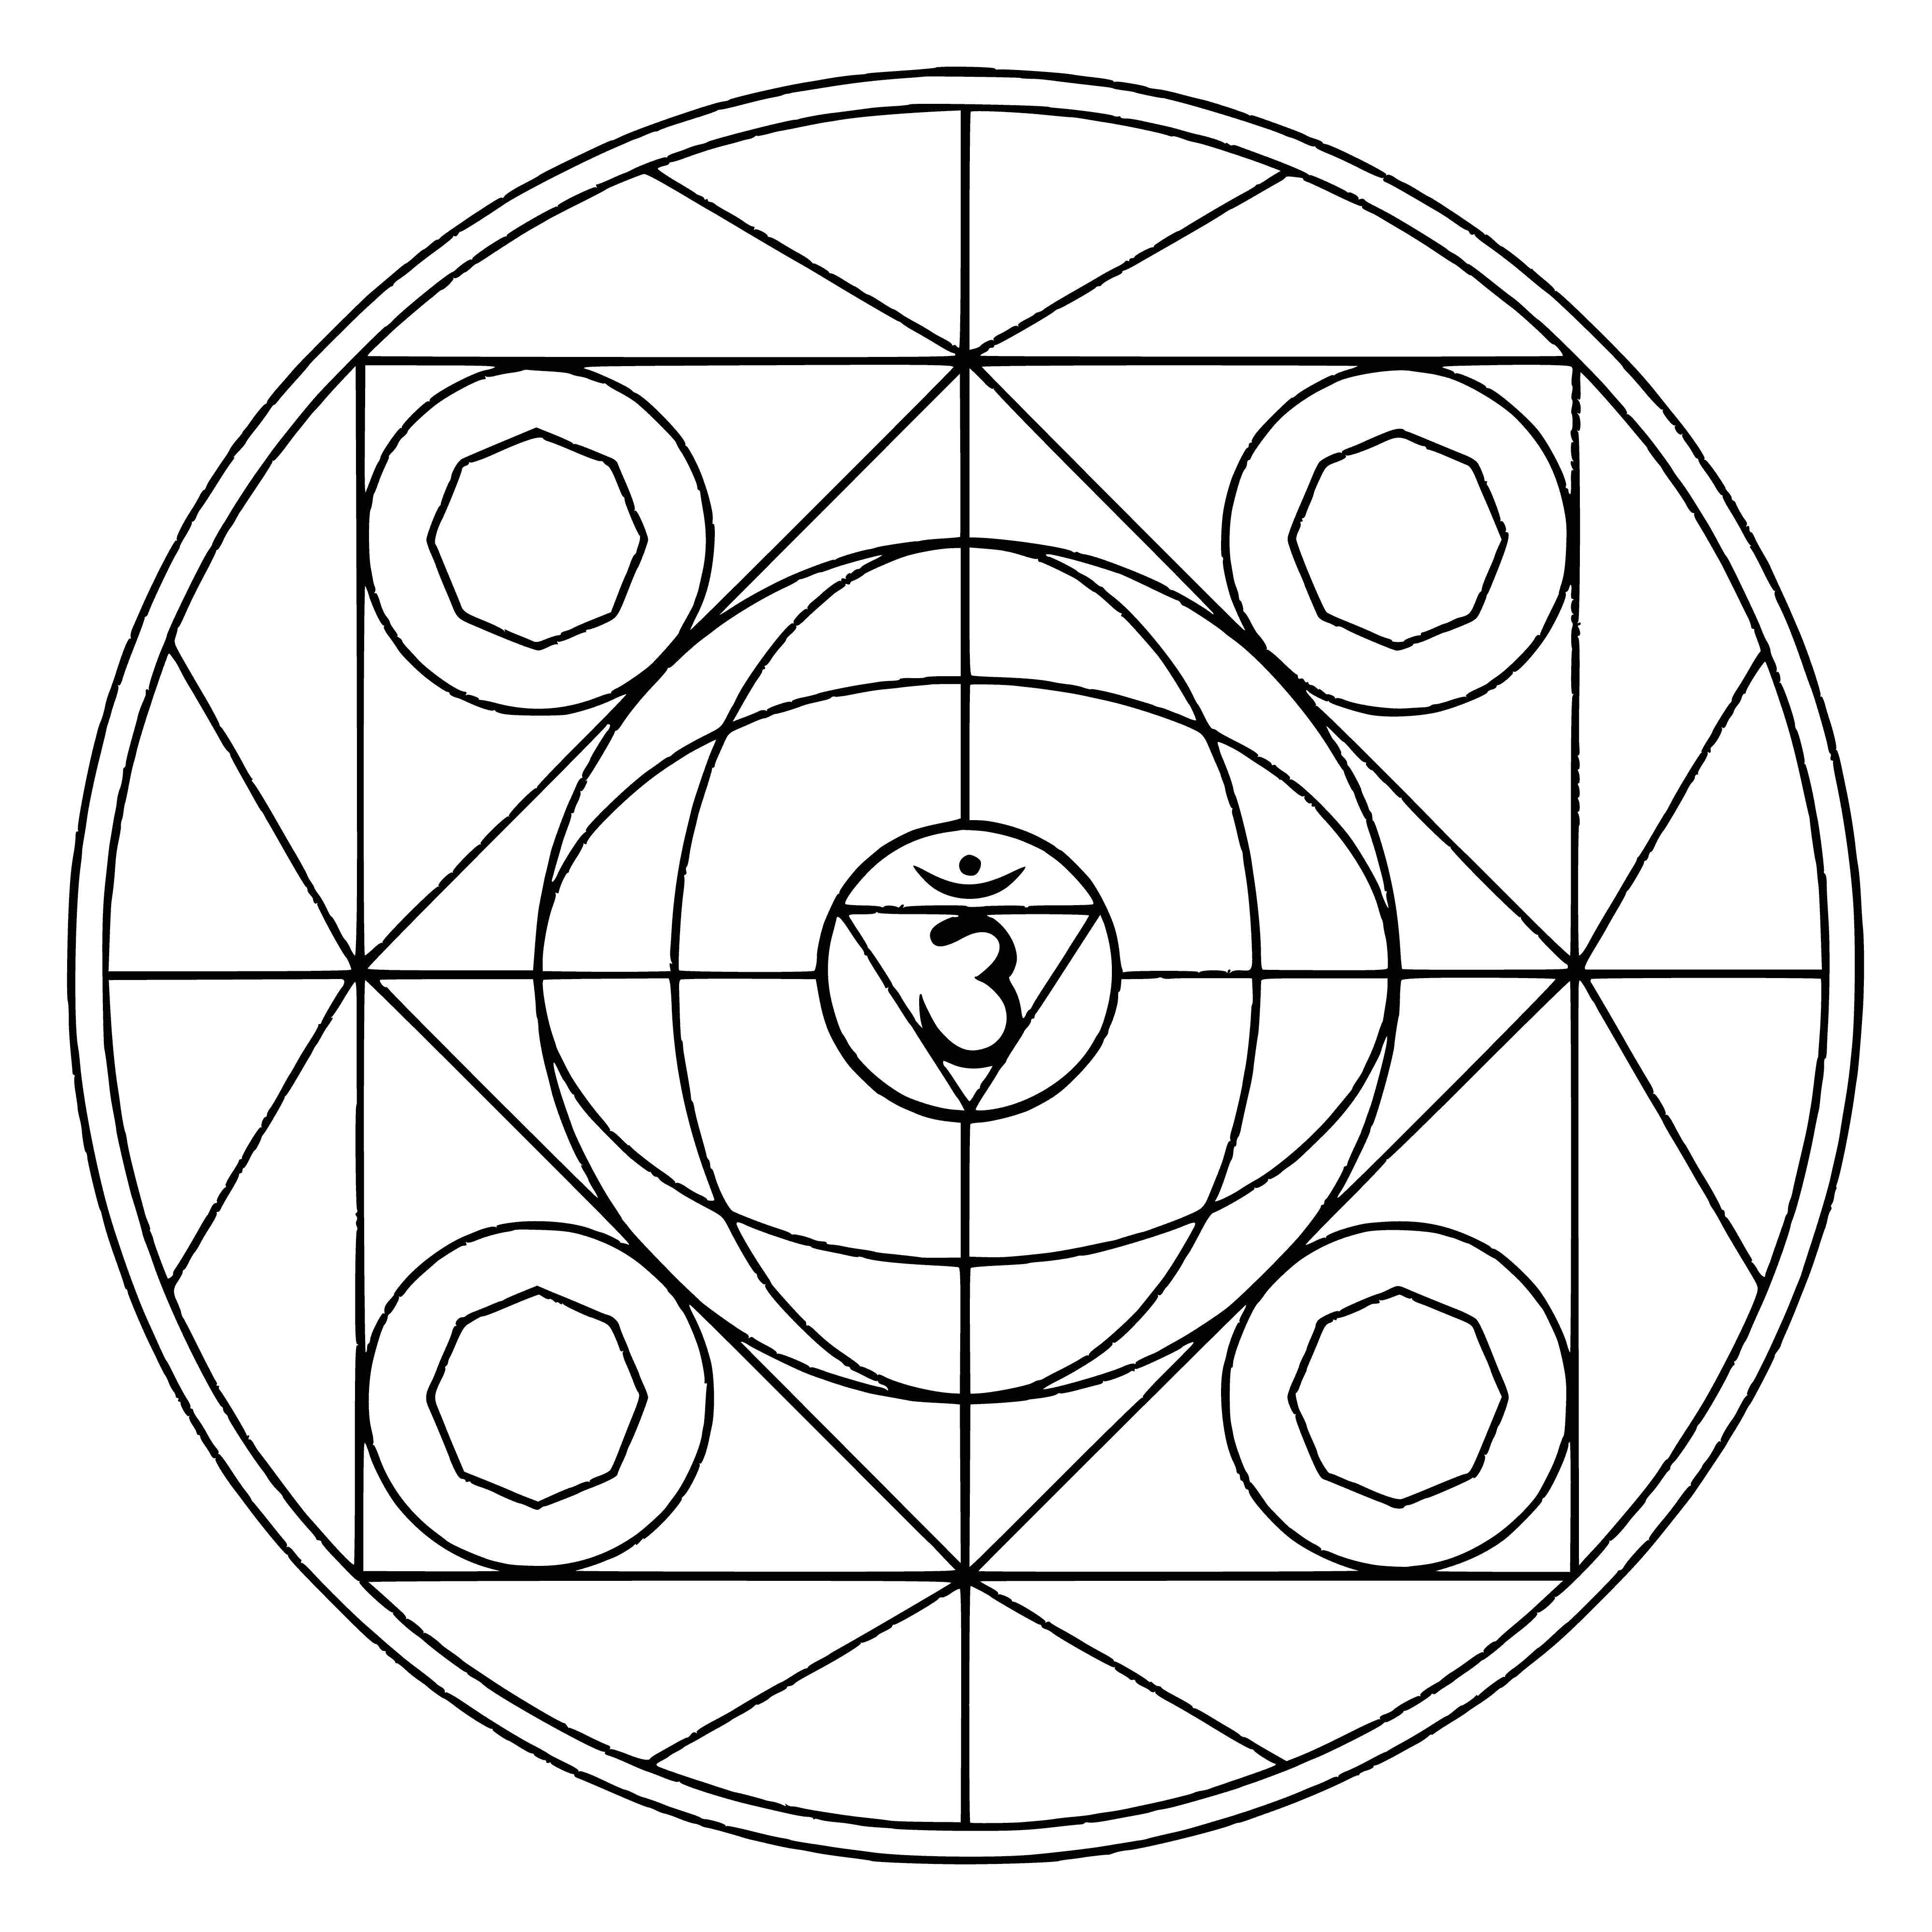 Mandala z symbolem Ajna kolorowanka